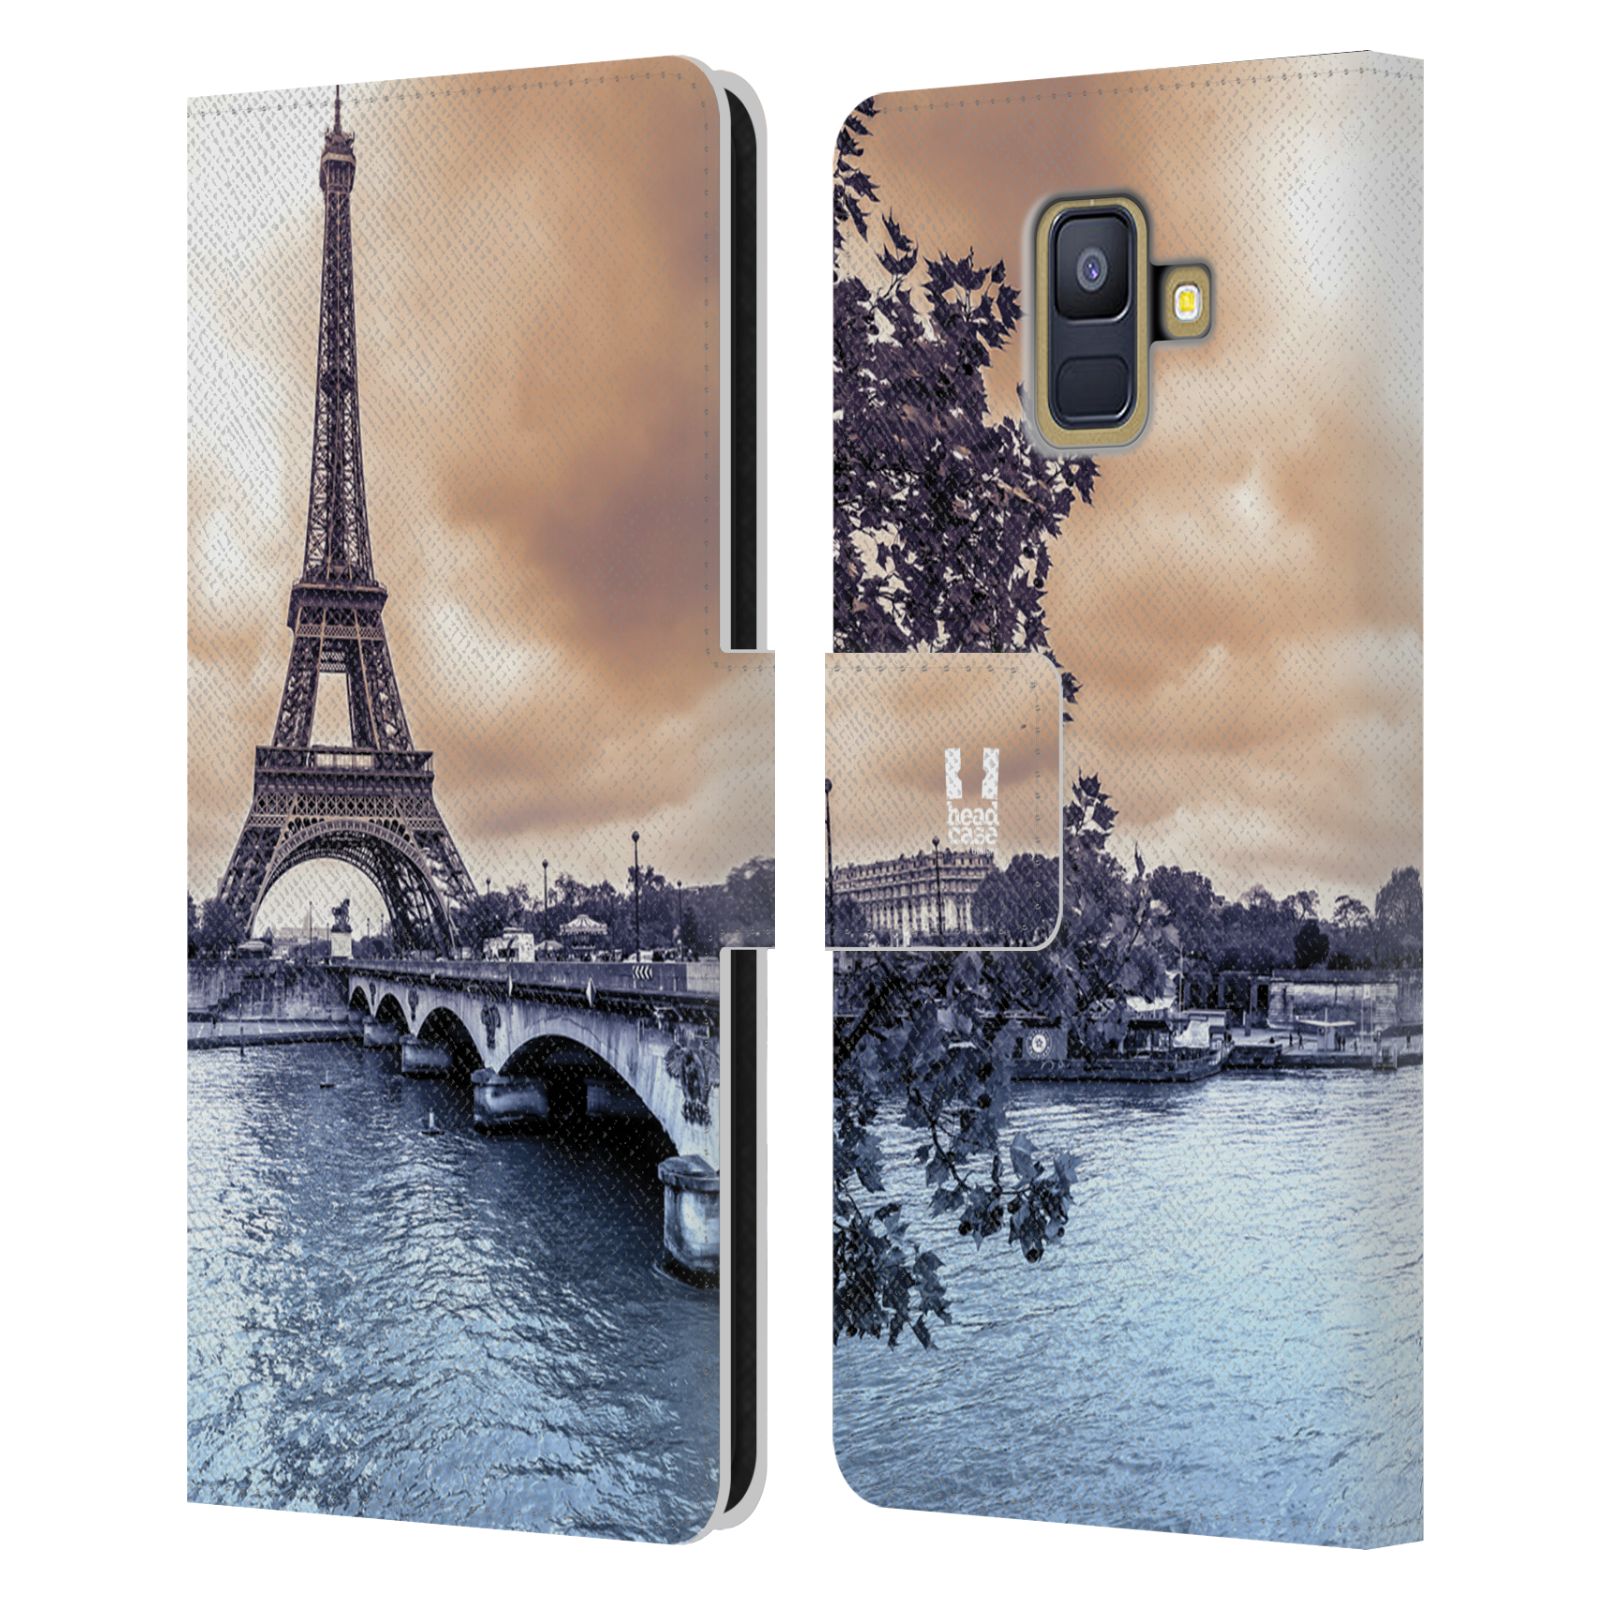 Pouzdro pro mobil Samsung Galaxy A6 2018 - Eiffelova věž Paříž - Francie